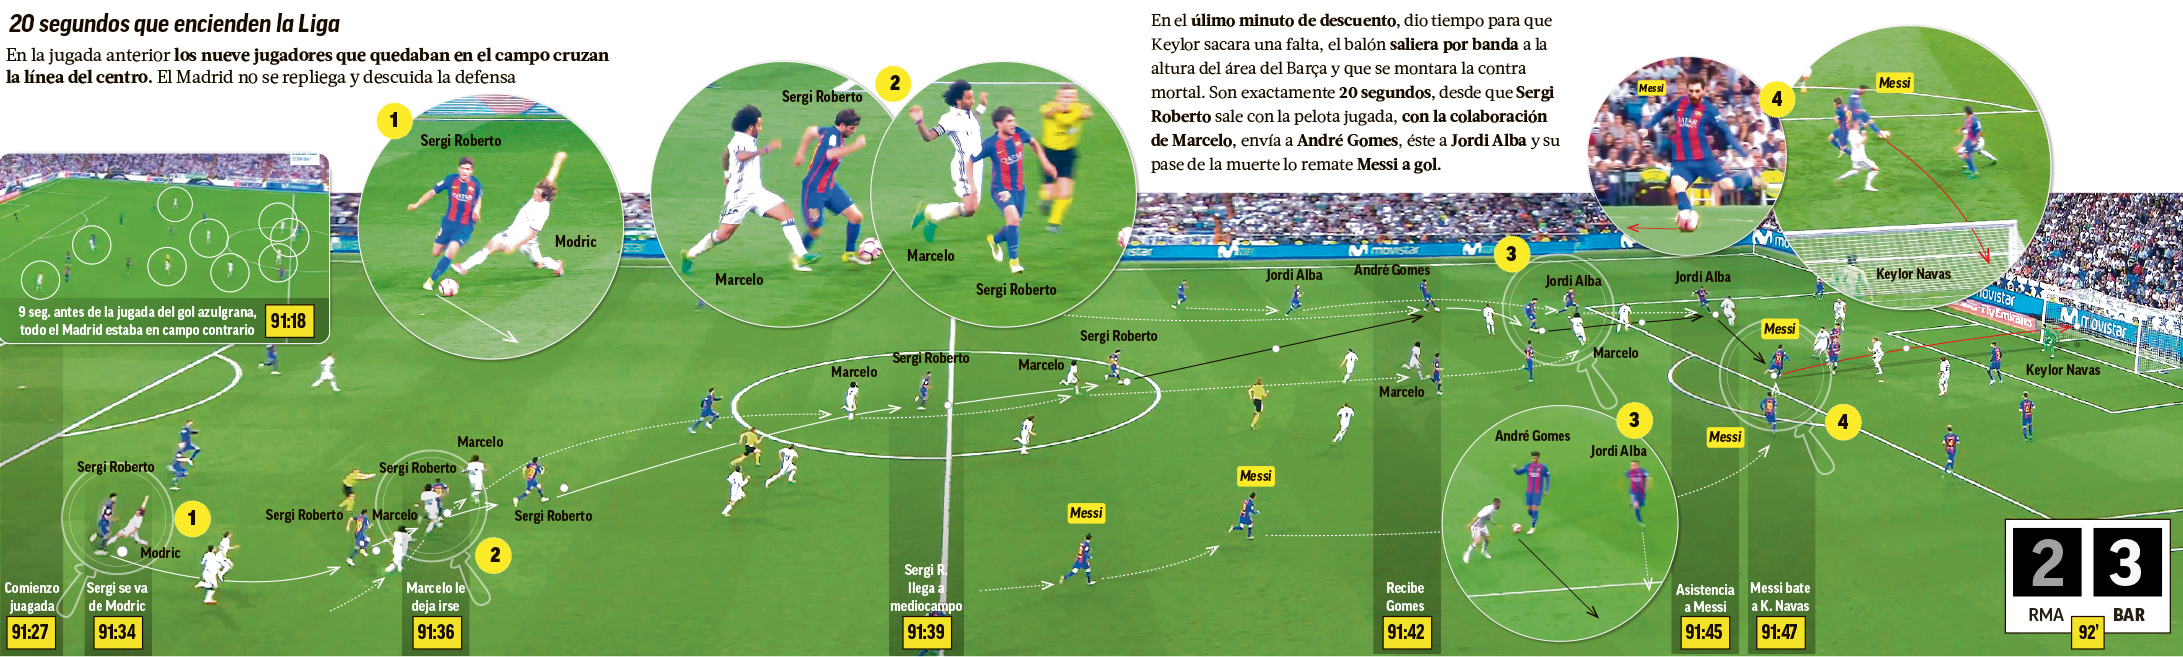 Anlisis del gol de Messi